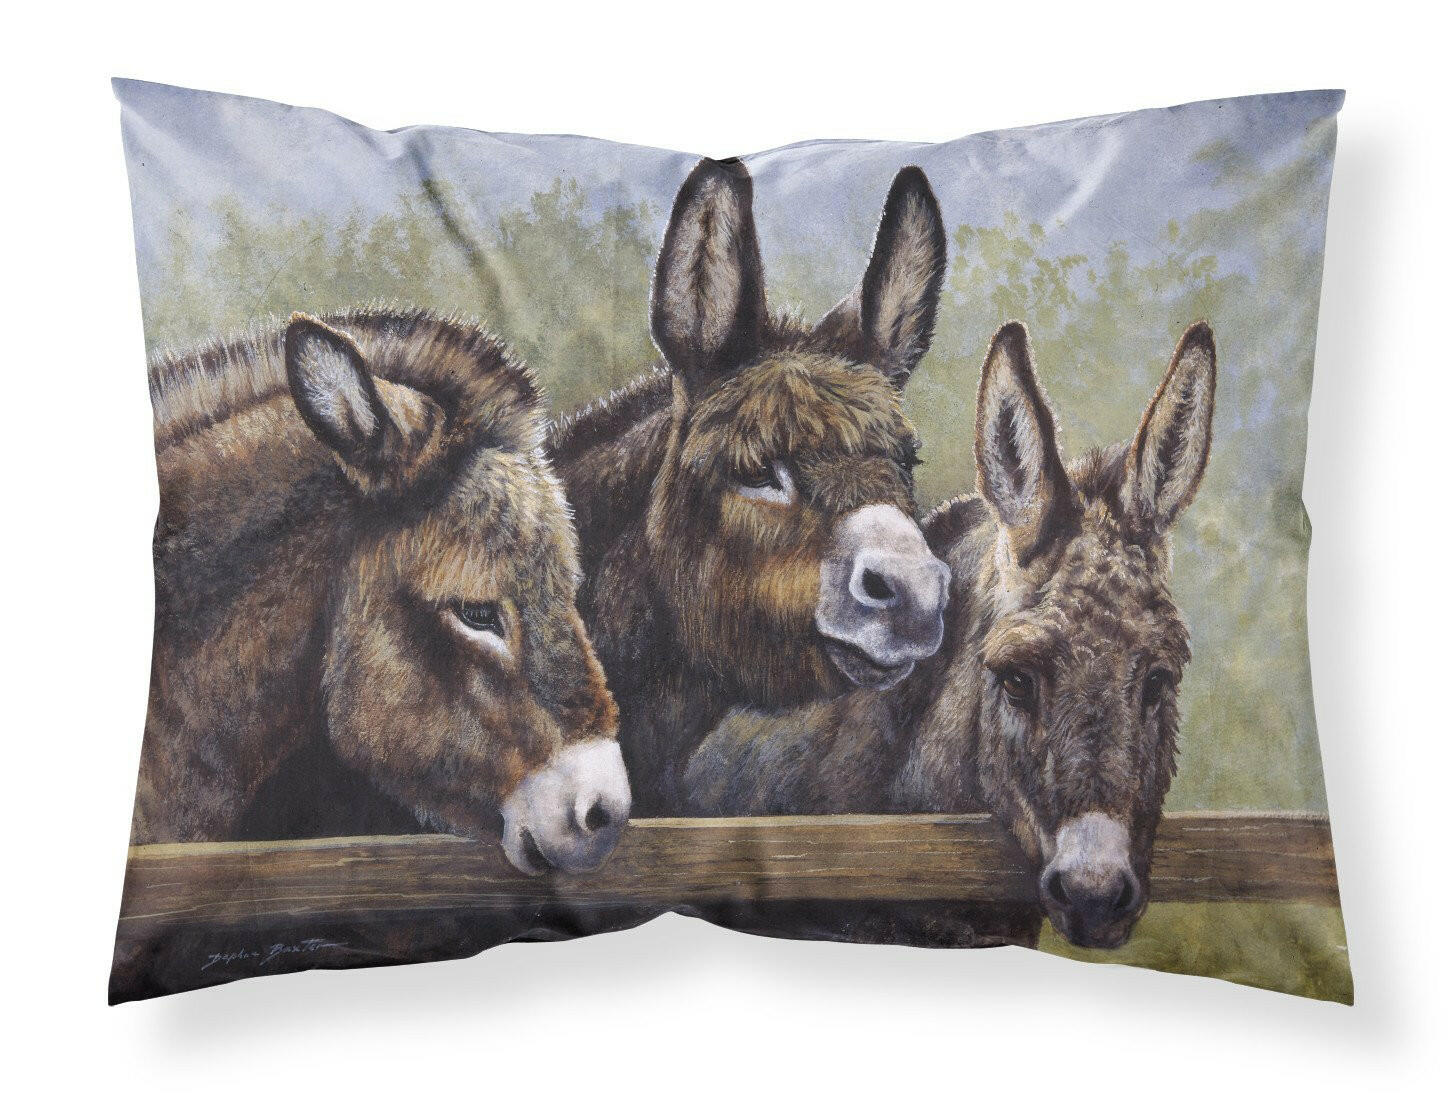 Donkeys by Daphne Baxter Fabric Standard Pillowcase BDBA0235PILLOWCASE by Caroline's Treasures